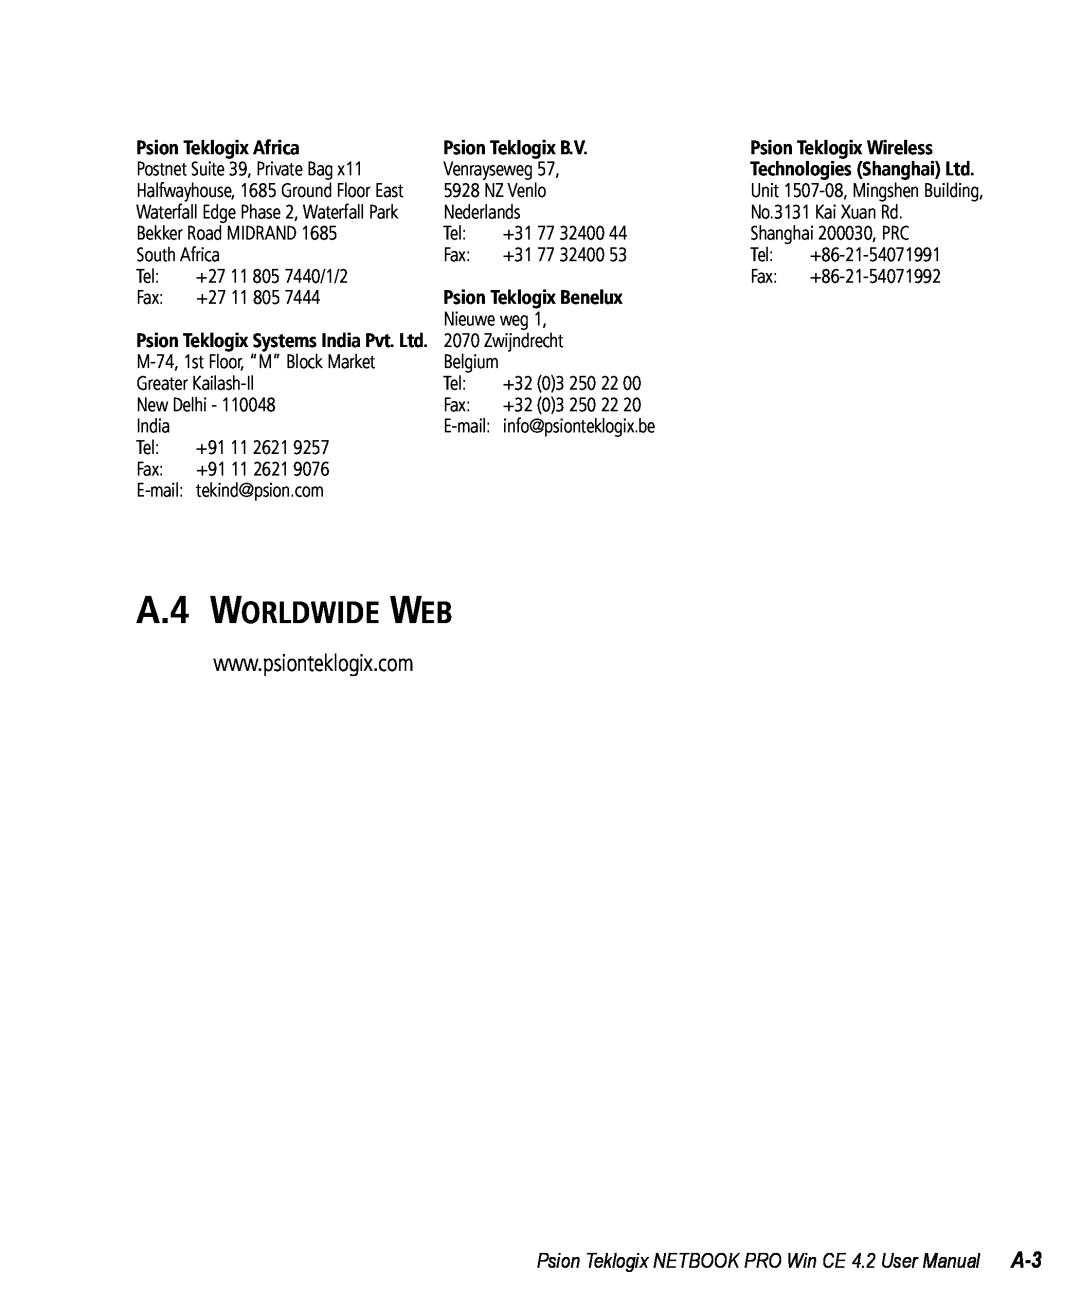 Psion Teklogix Win CE 4.2 user manual A.4 WORLDWIDE WEB, Psion Teklogix Africa, Psion Teklogix B.V, Psion Teklogix Wireless 